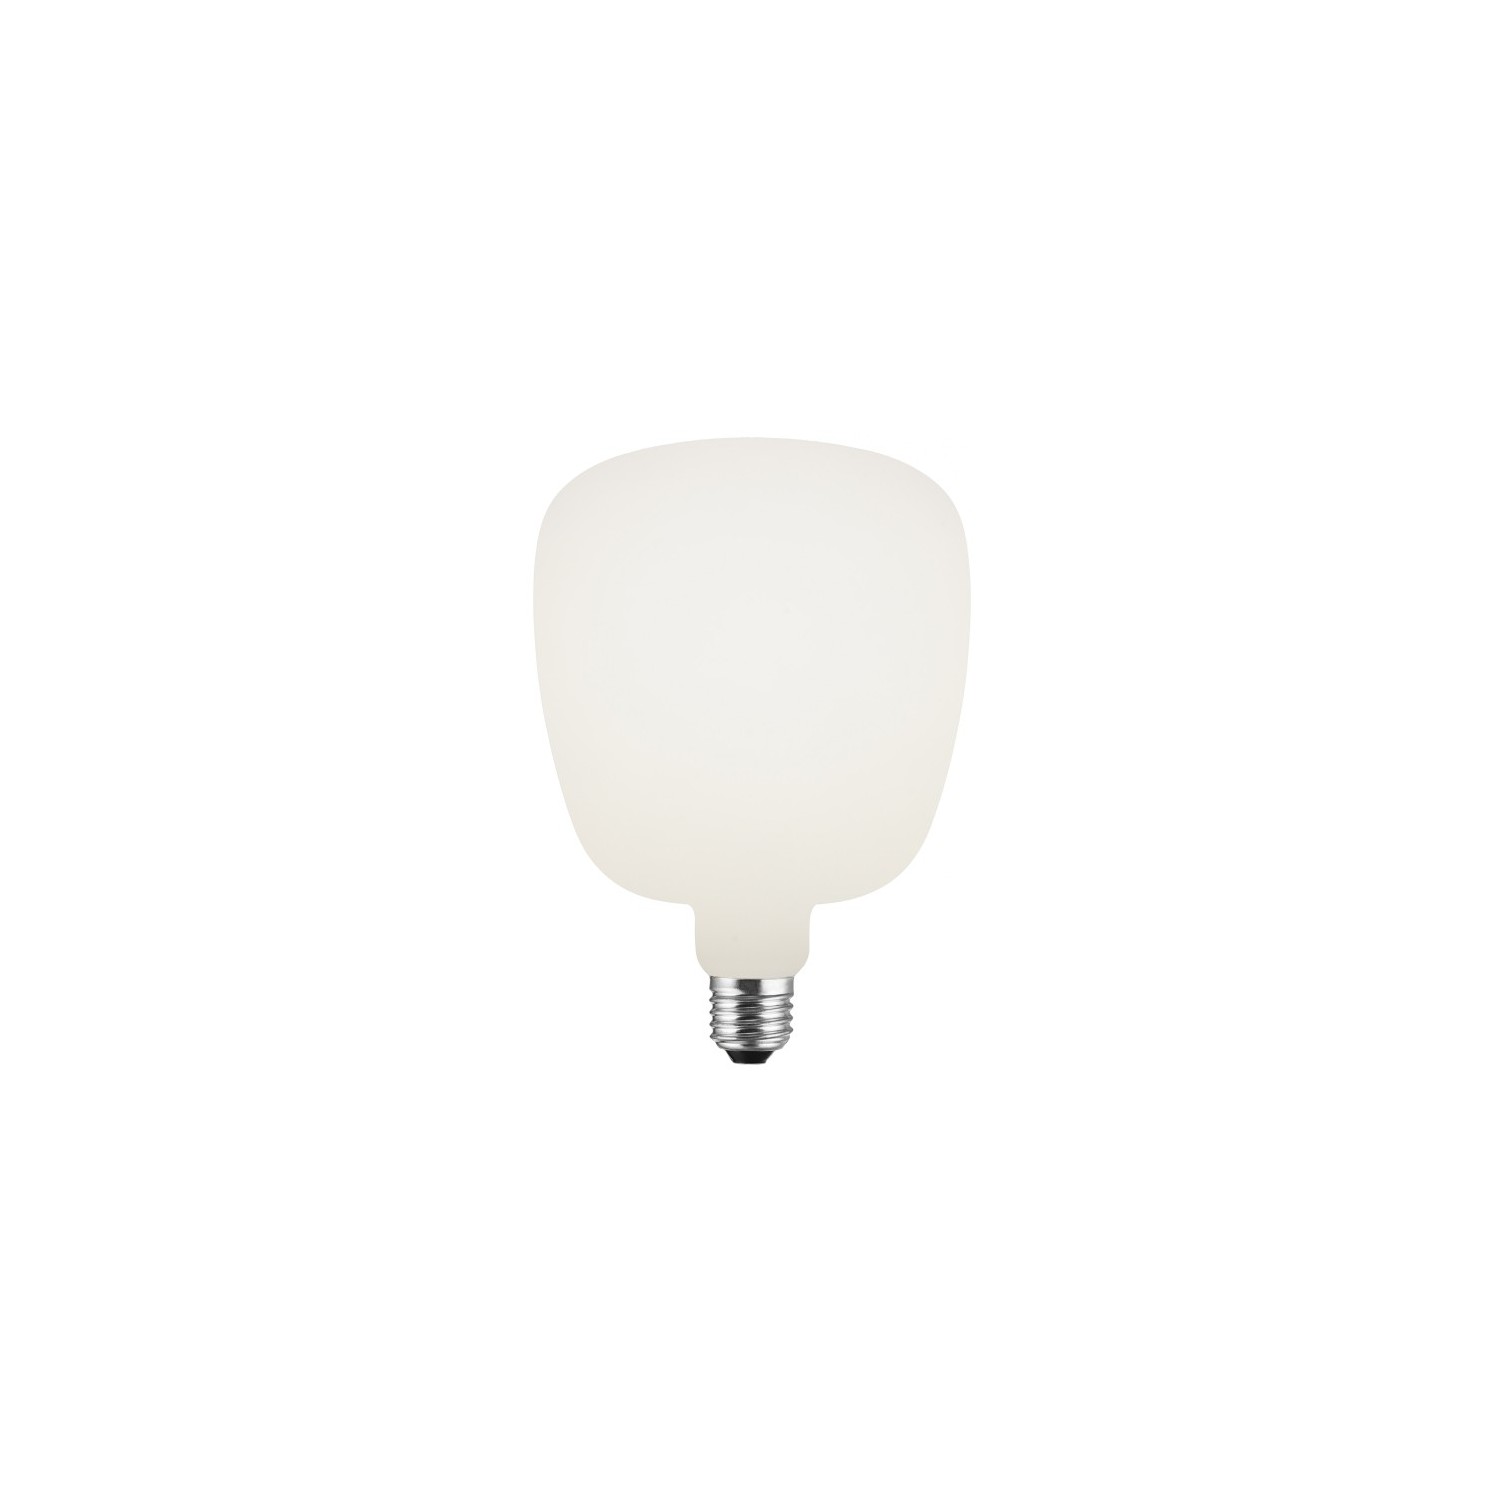 Bombilla LED de Porcelana Drum 6W E27 Regulable 2700K - LCODRUM